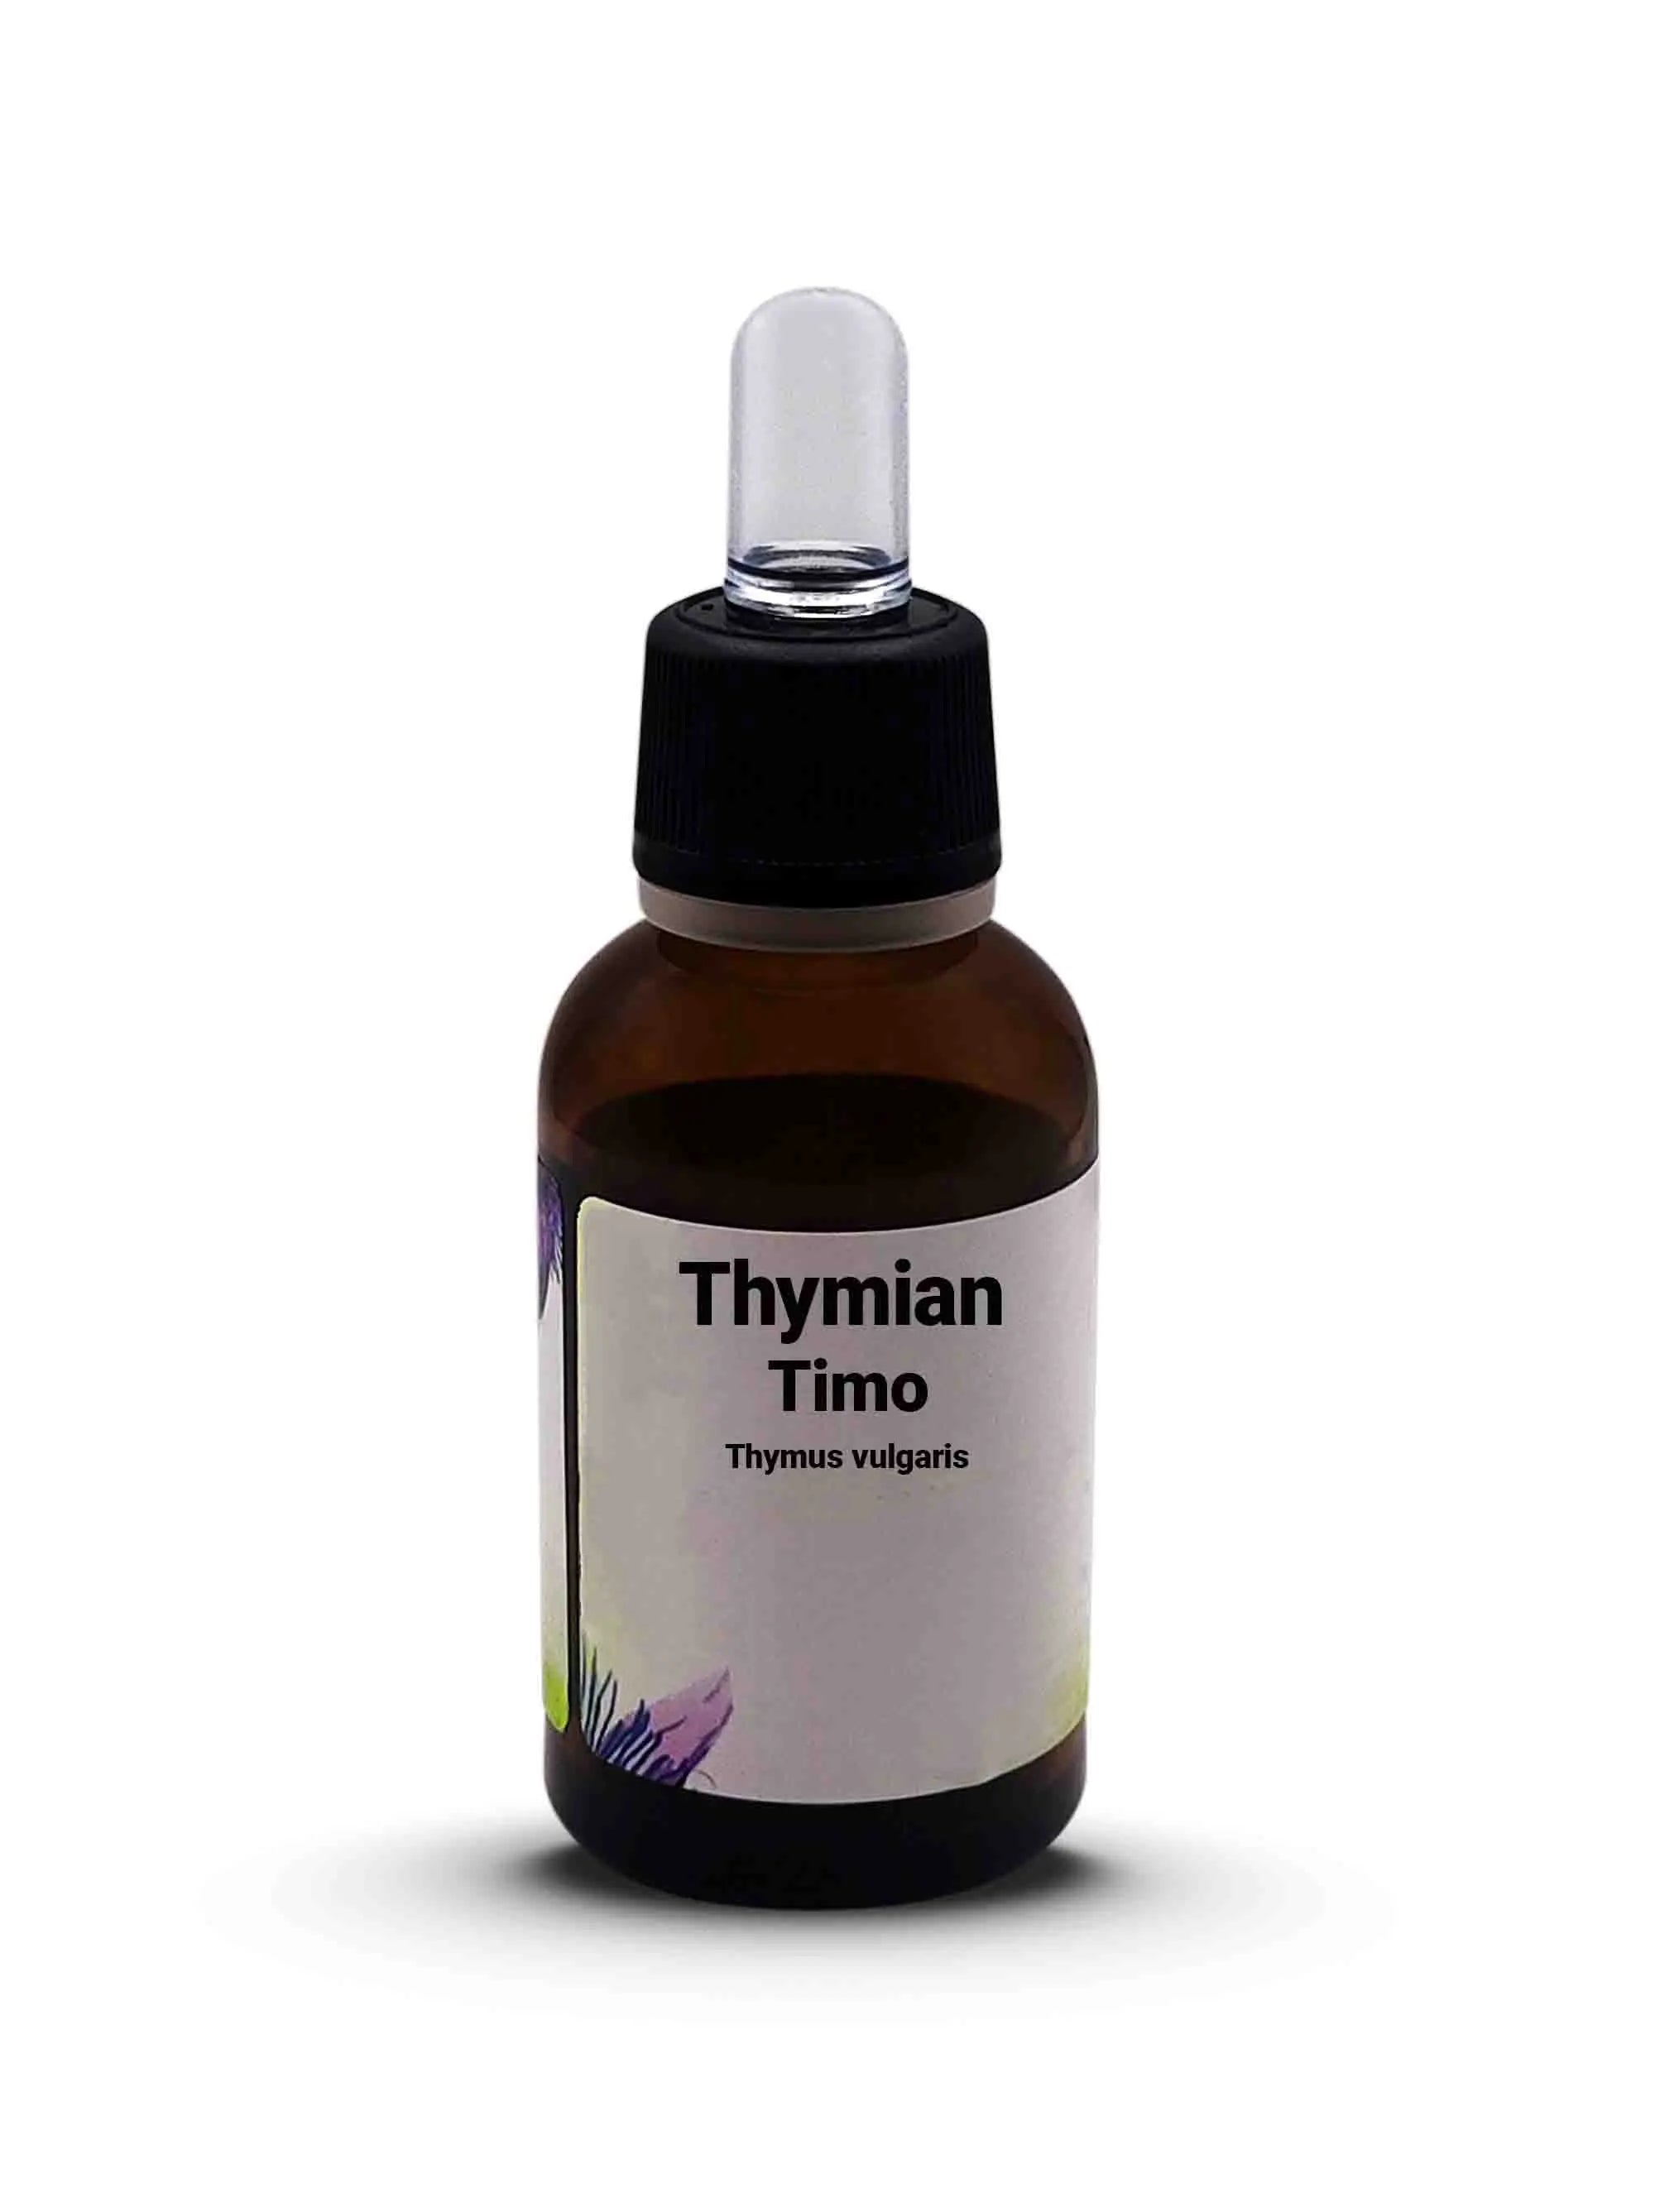 Thymian Timo Thymus vulgaris 30 ml